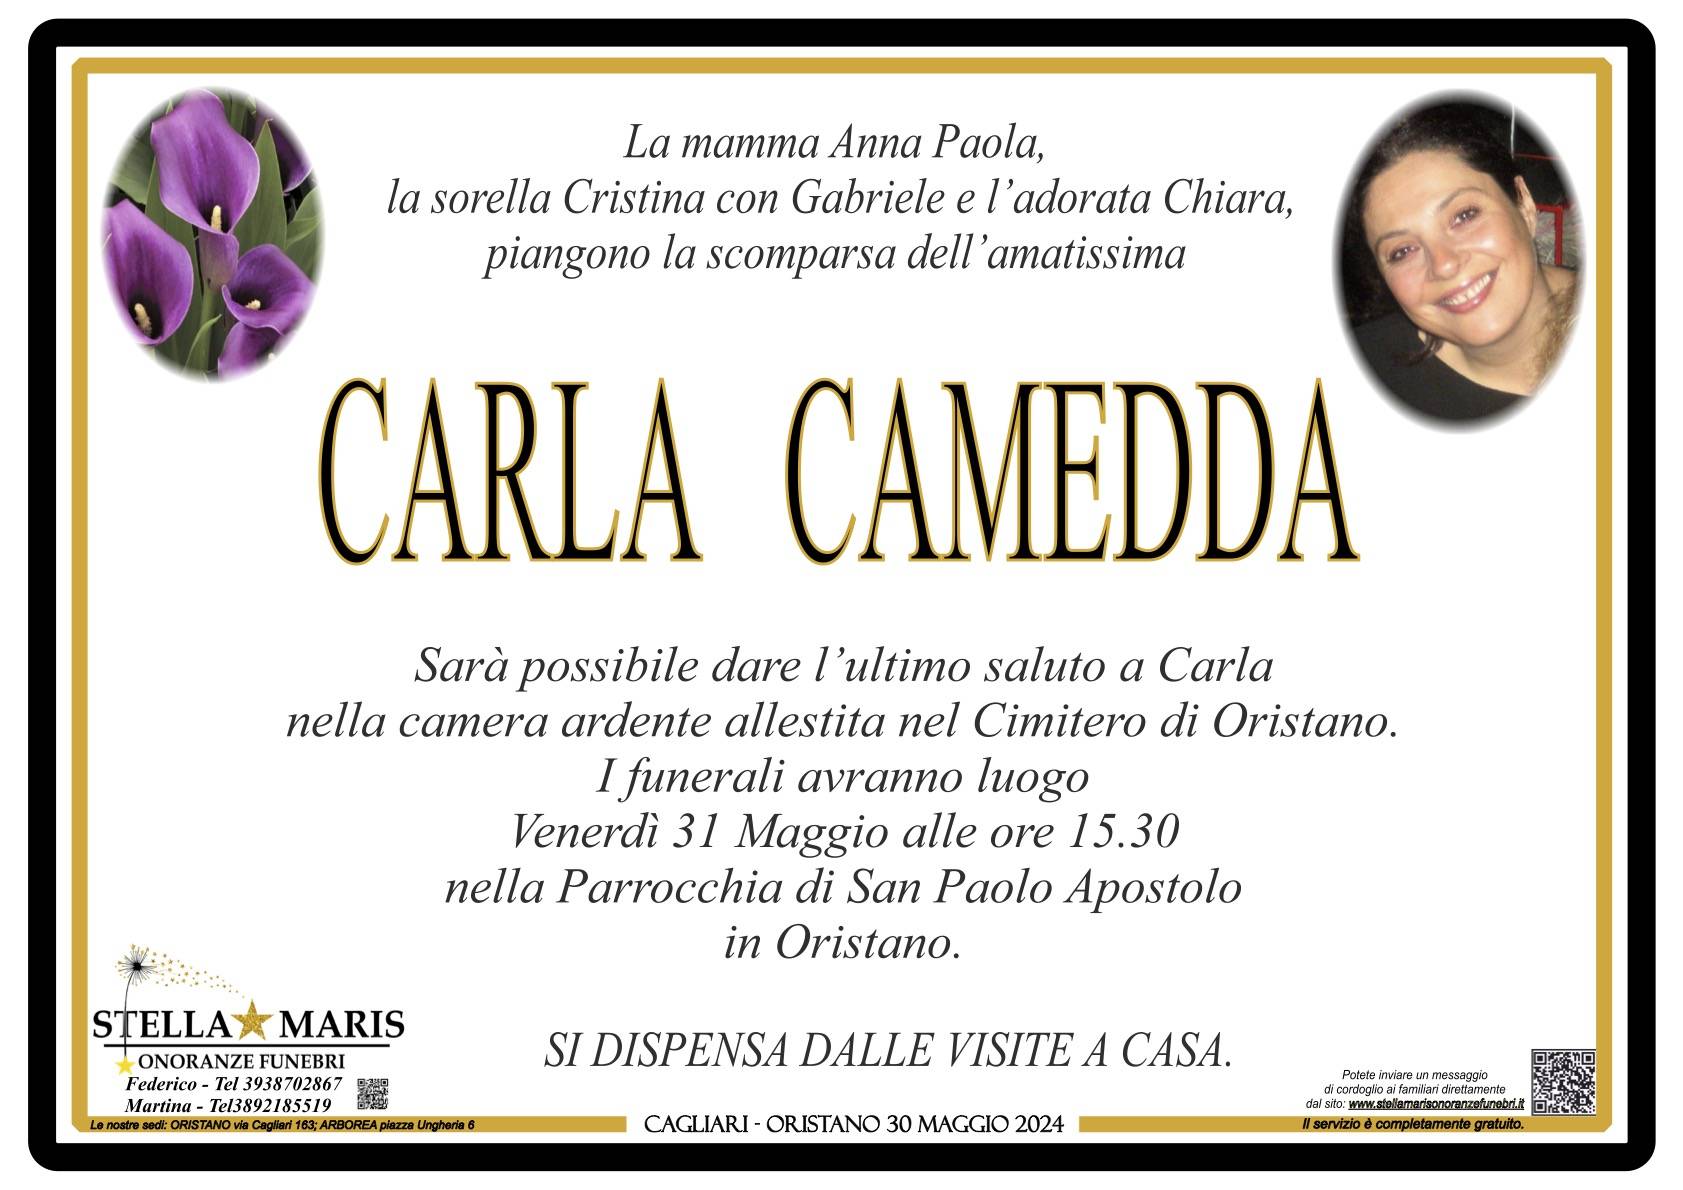 Carla Camedda